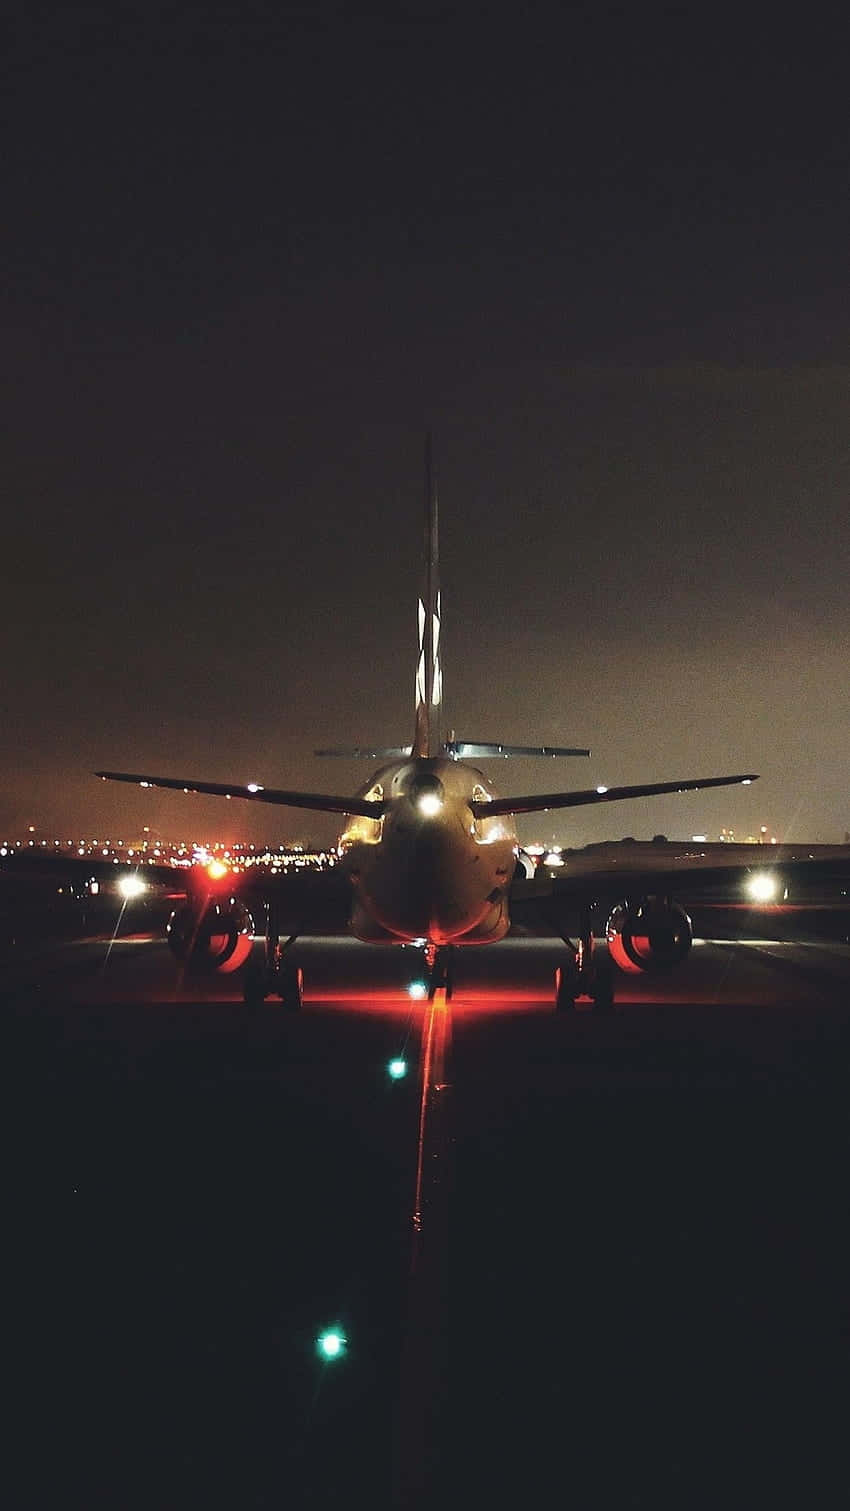 Nighttime Airplane Runway Illumination Wallpaper